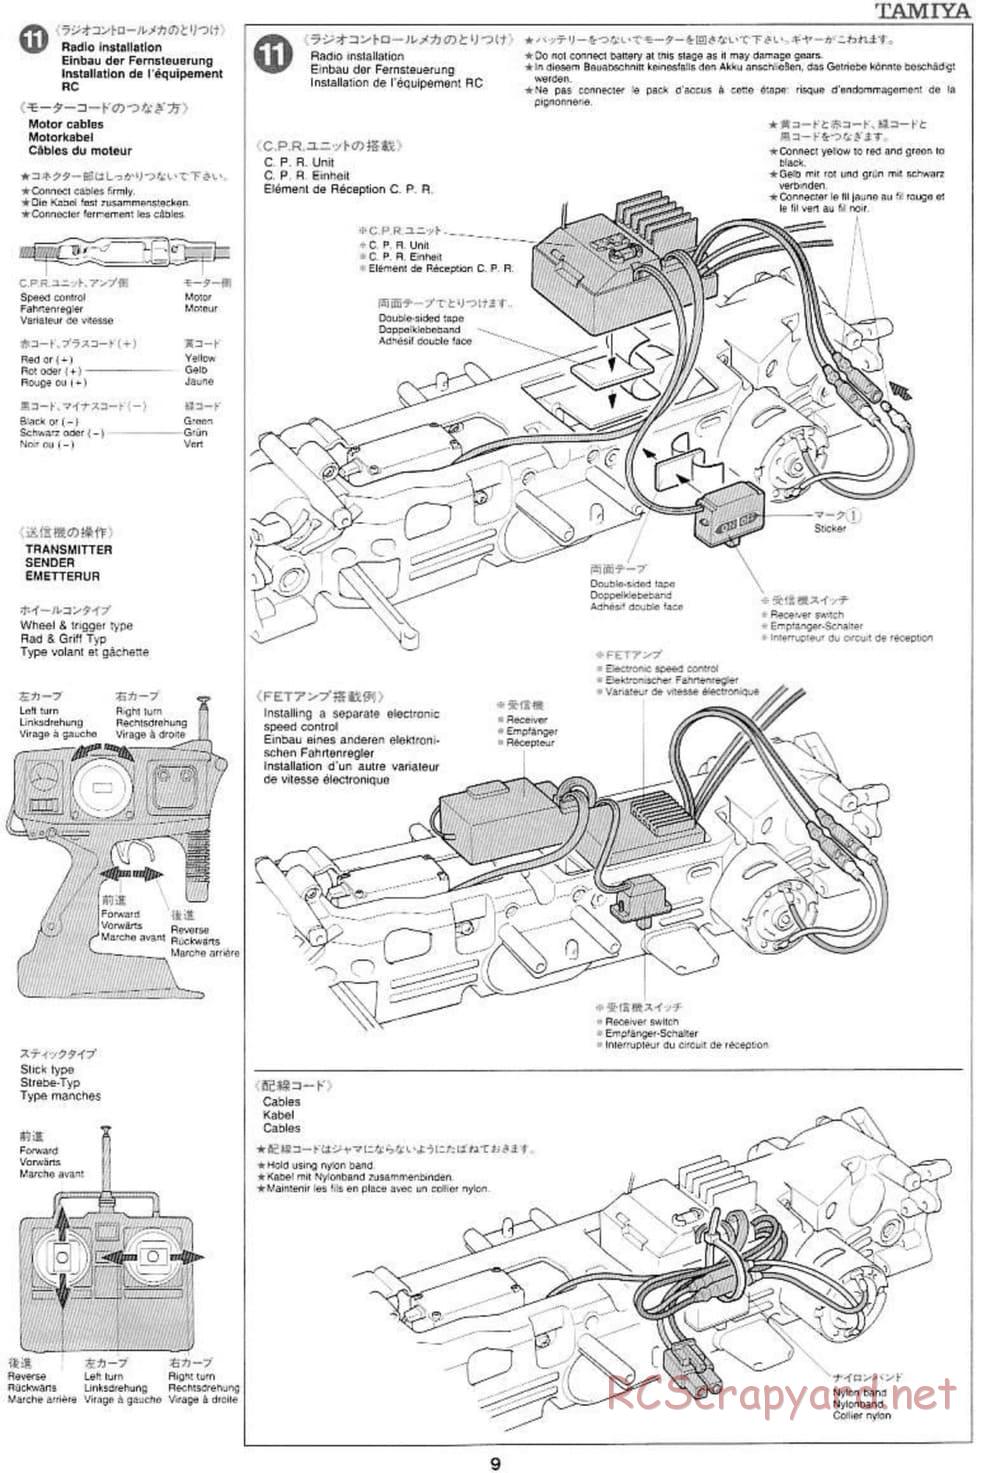 Tamiya - Ford Escort WRC - TL-01 Chassis - Manual - Page 9